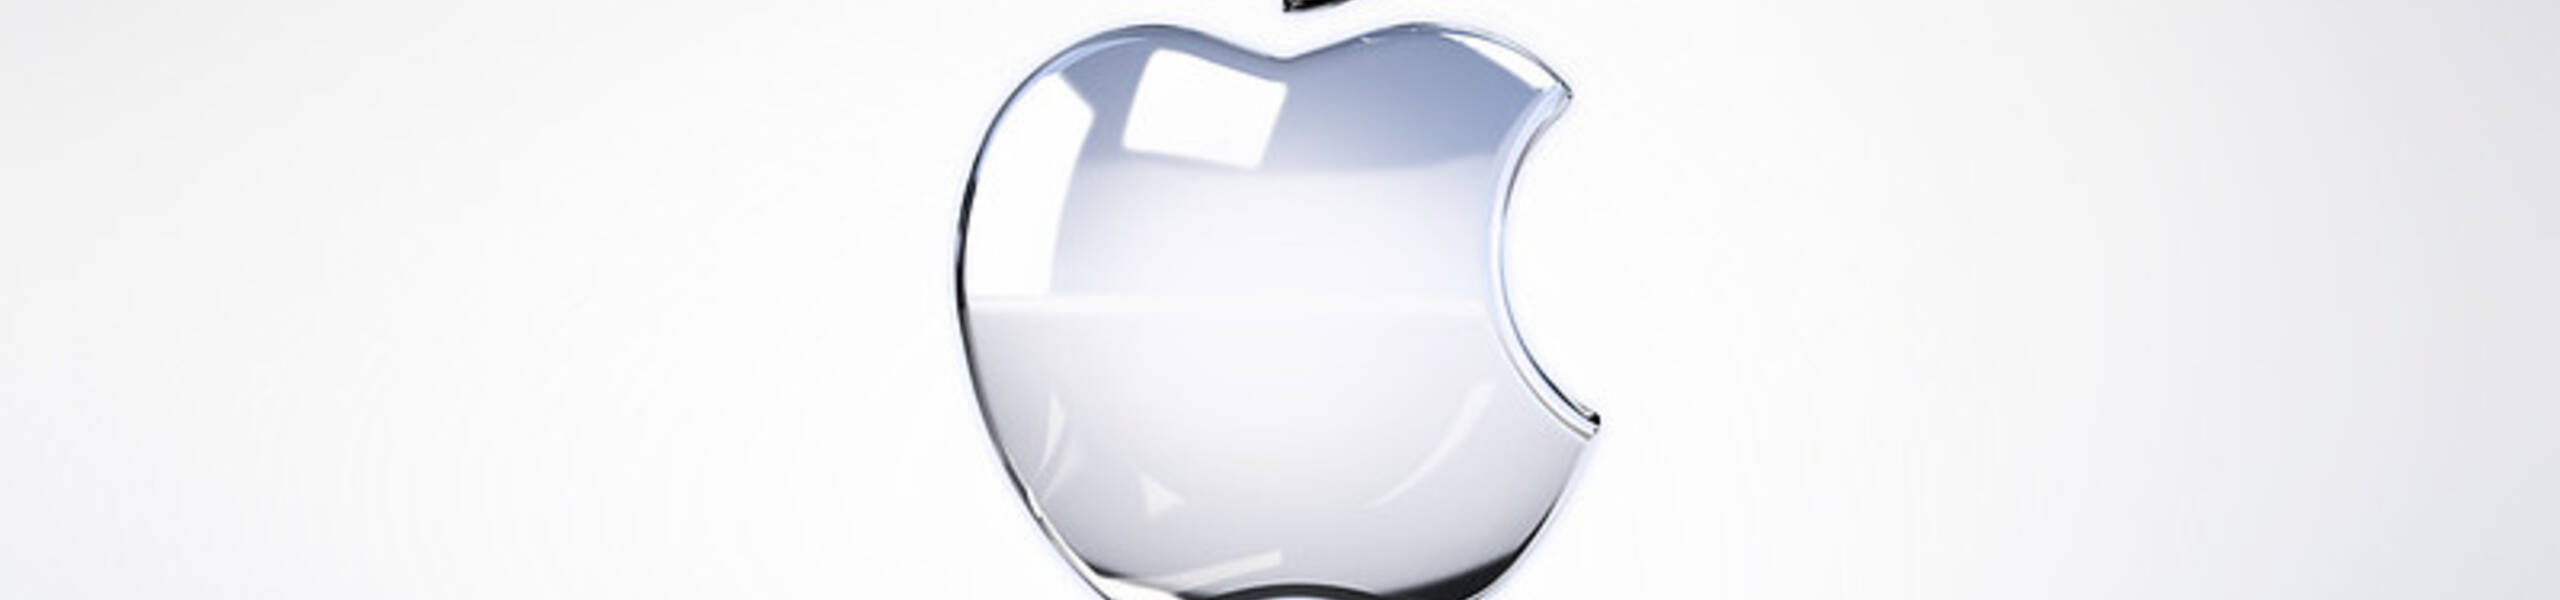 Apple ขึ้นราคา iPhone 14 ในตลาดสำคัญ